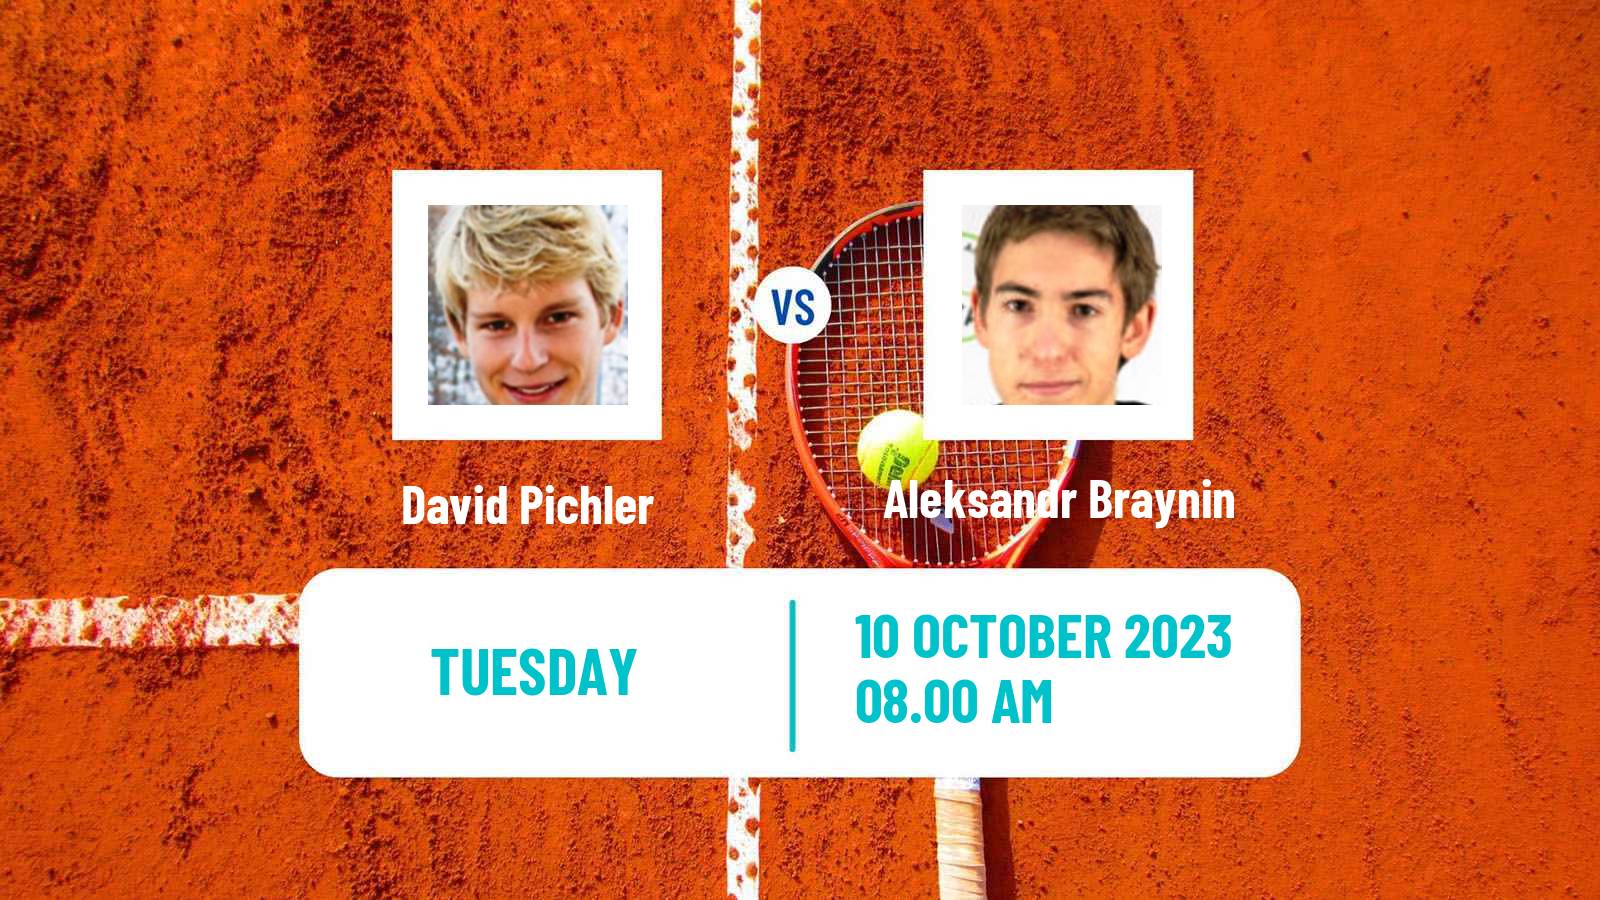 Tennis ITF M25 Tavira Men David Pichler - Aleksandr Braynin